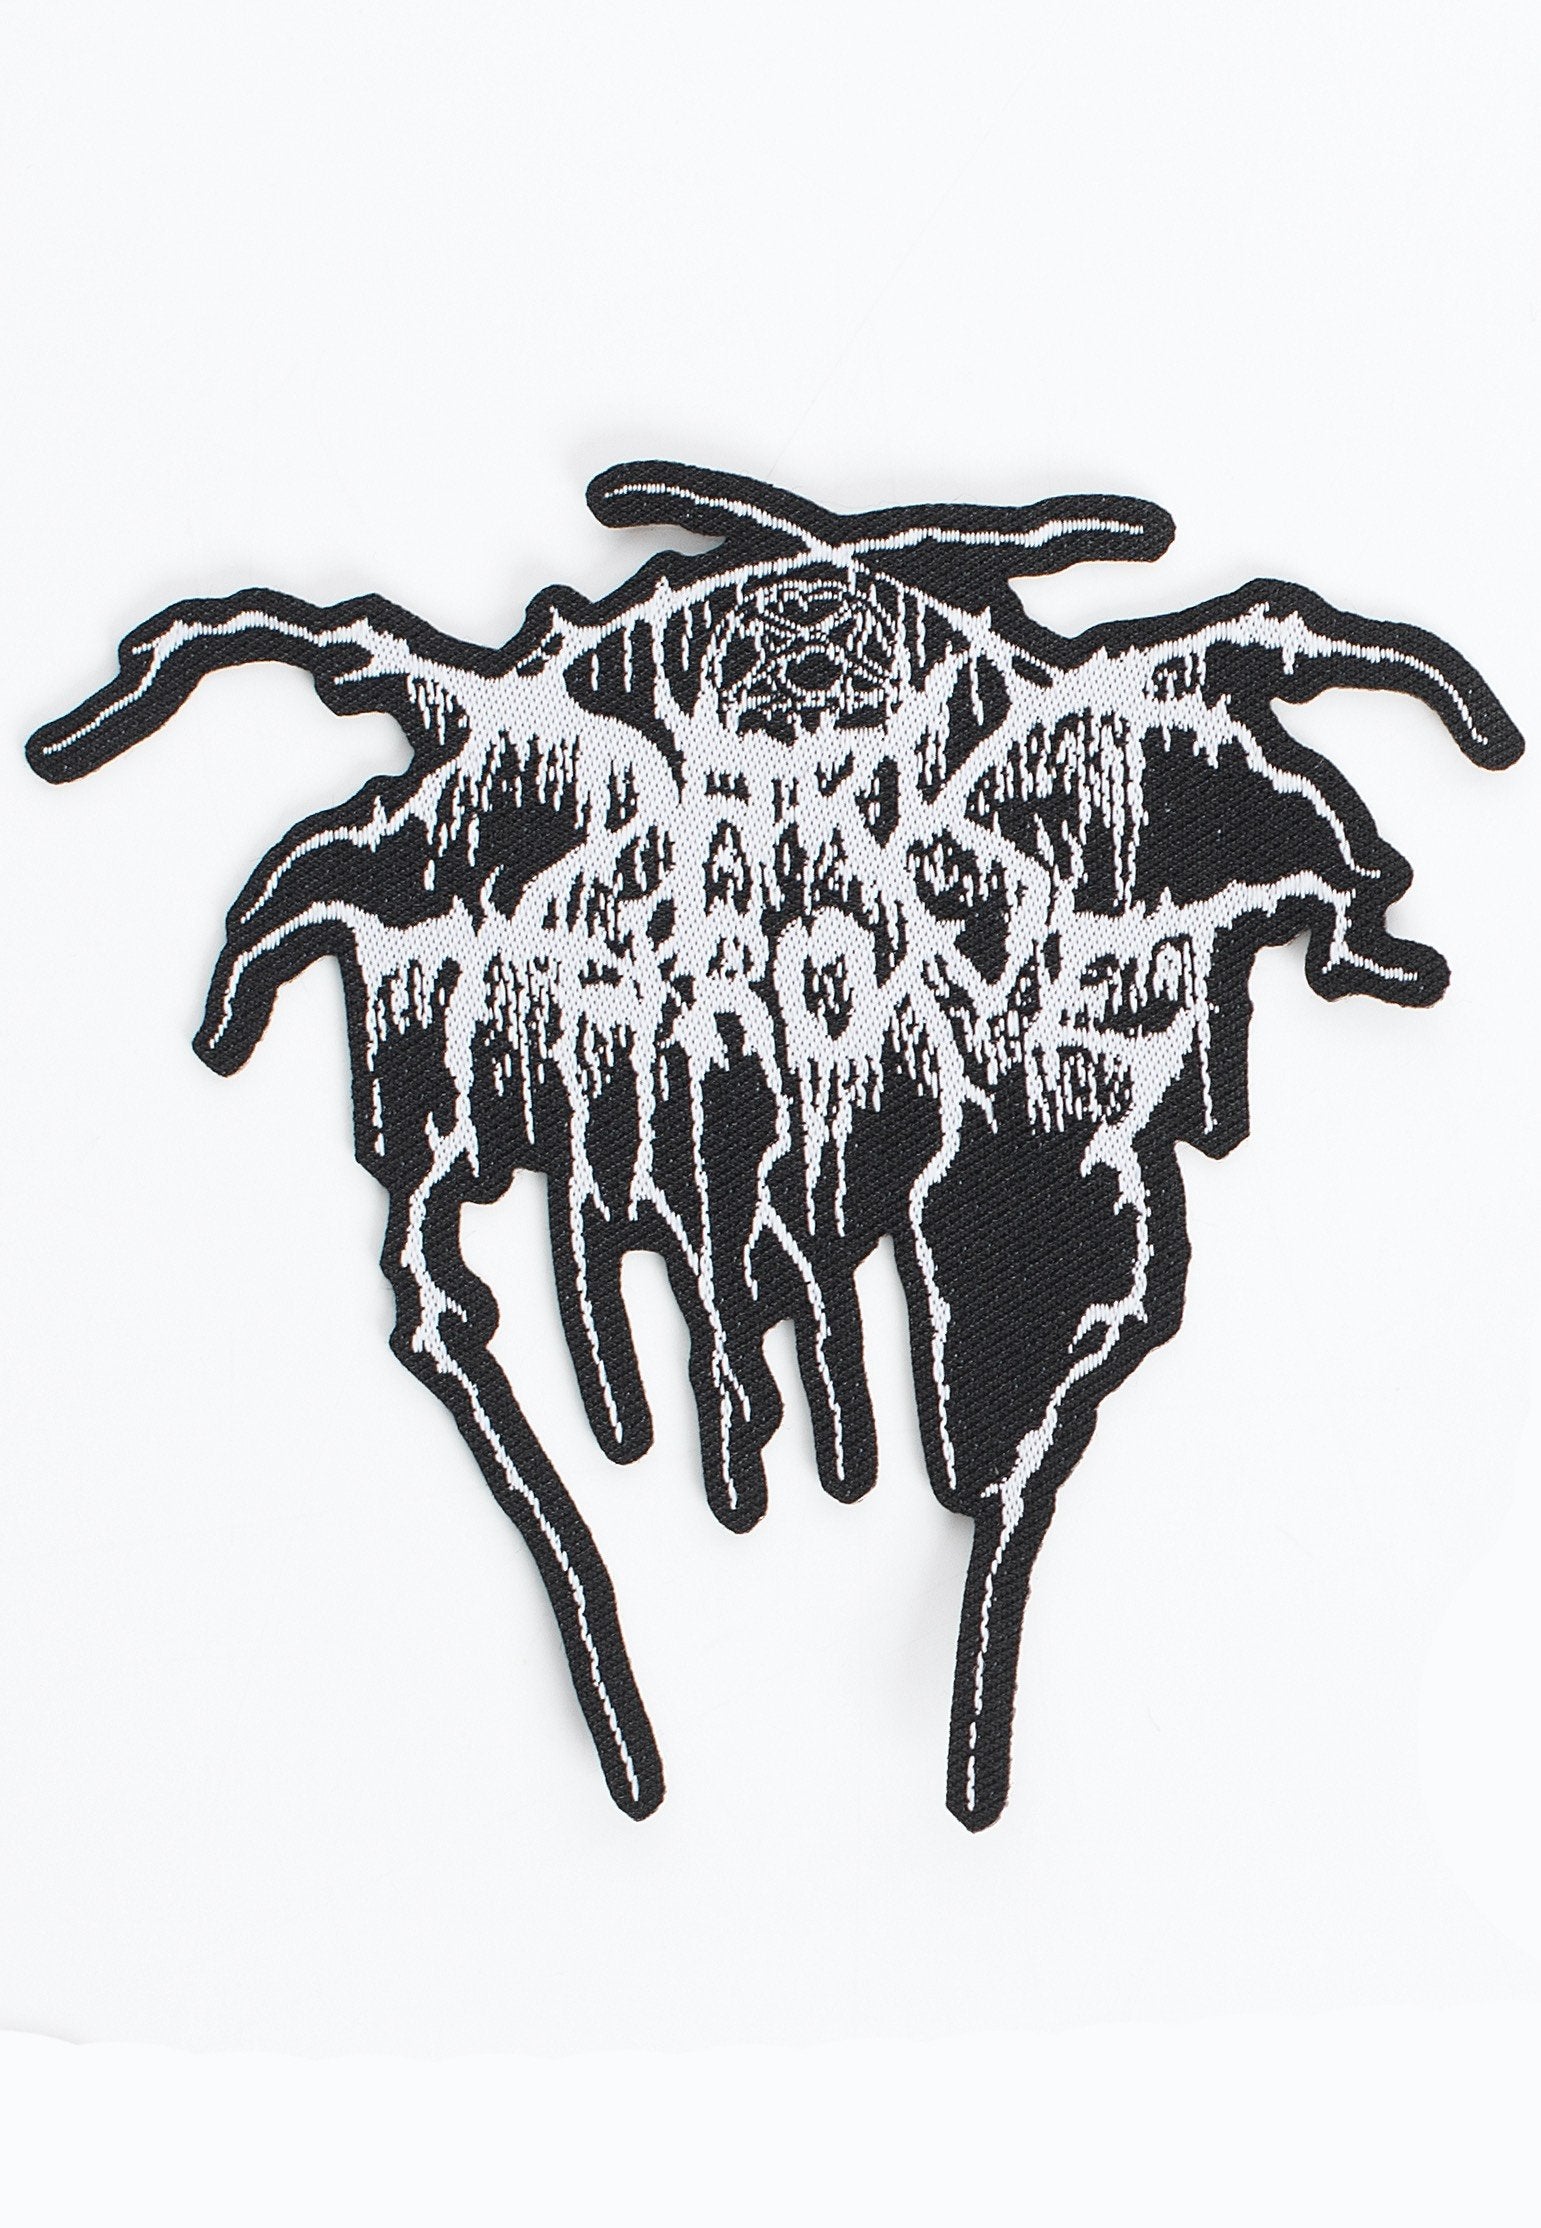 Darkthrone - Logo Cut Out - Patch